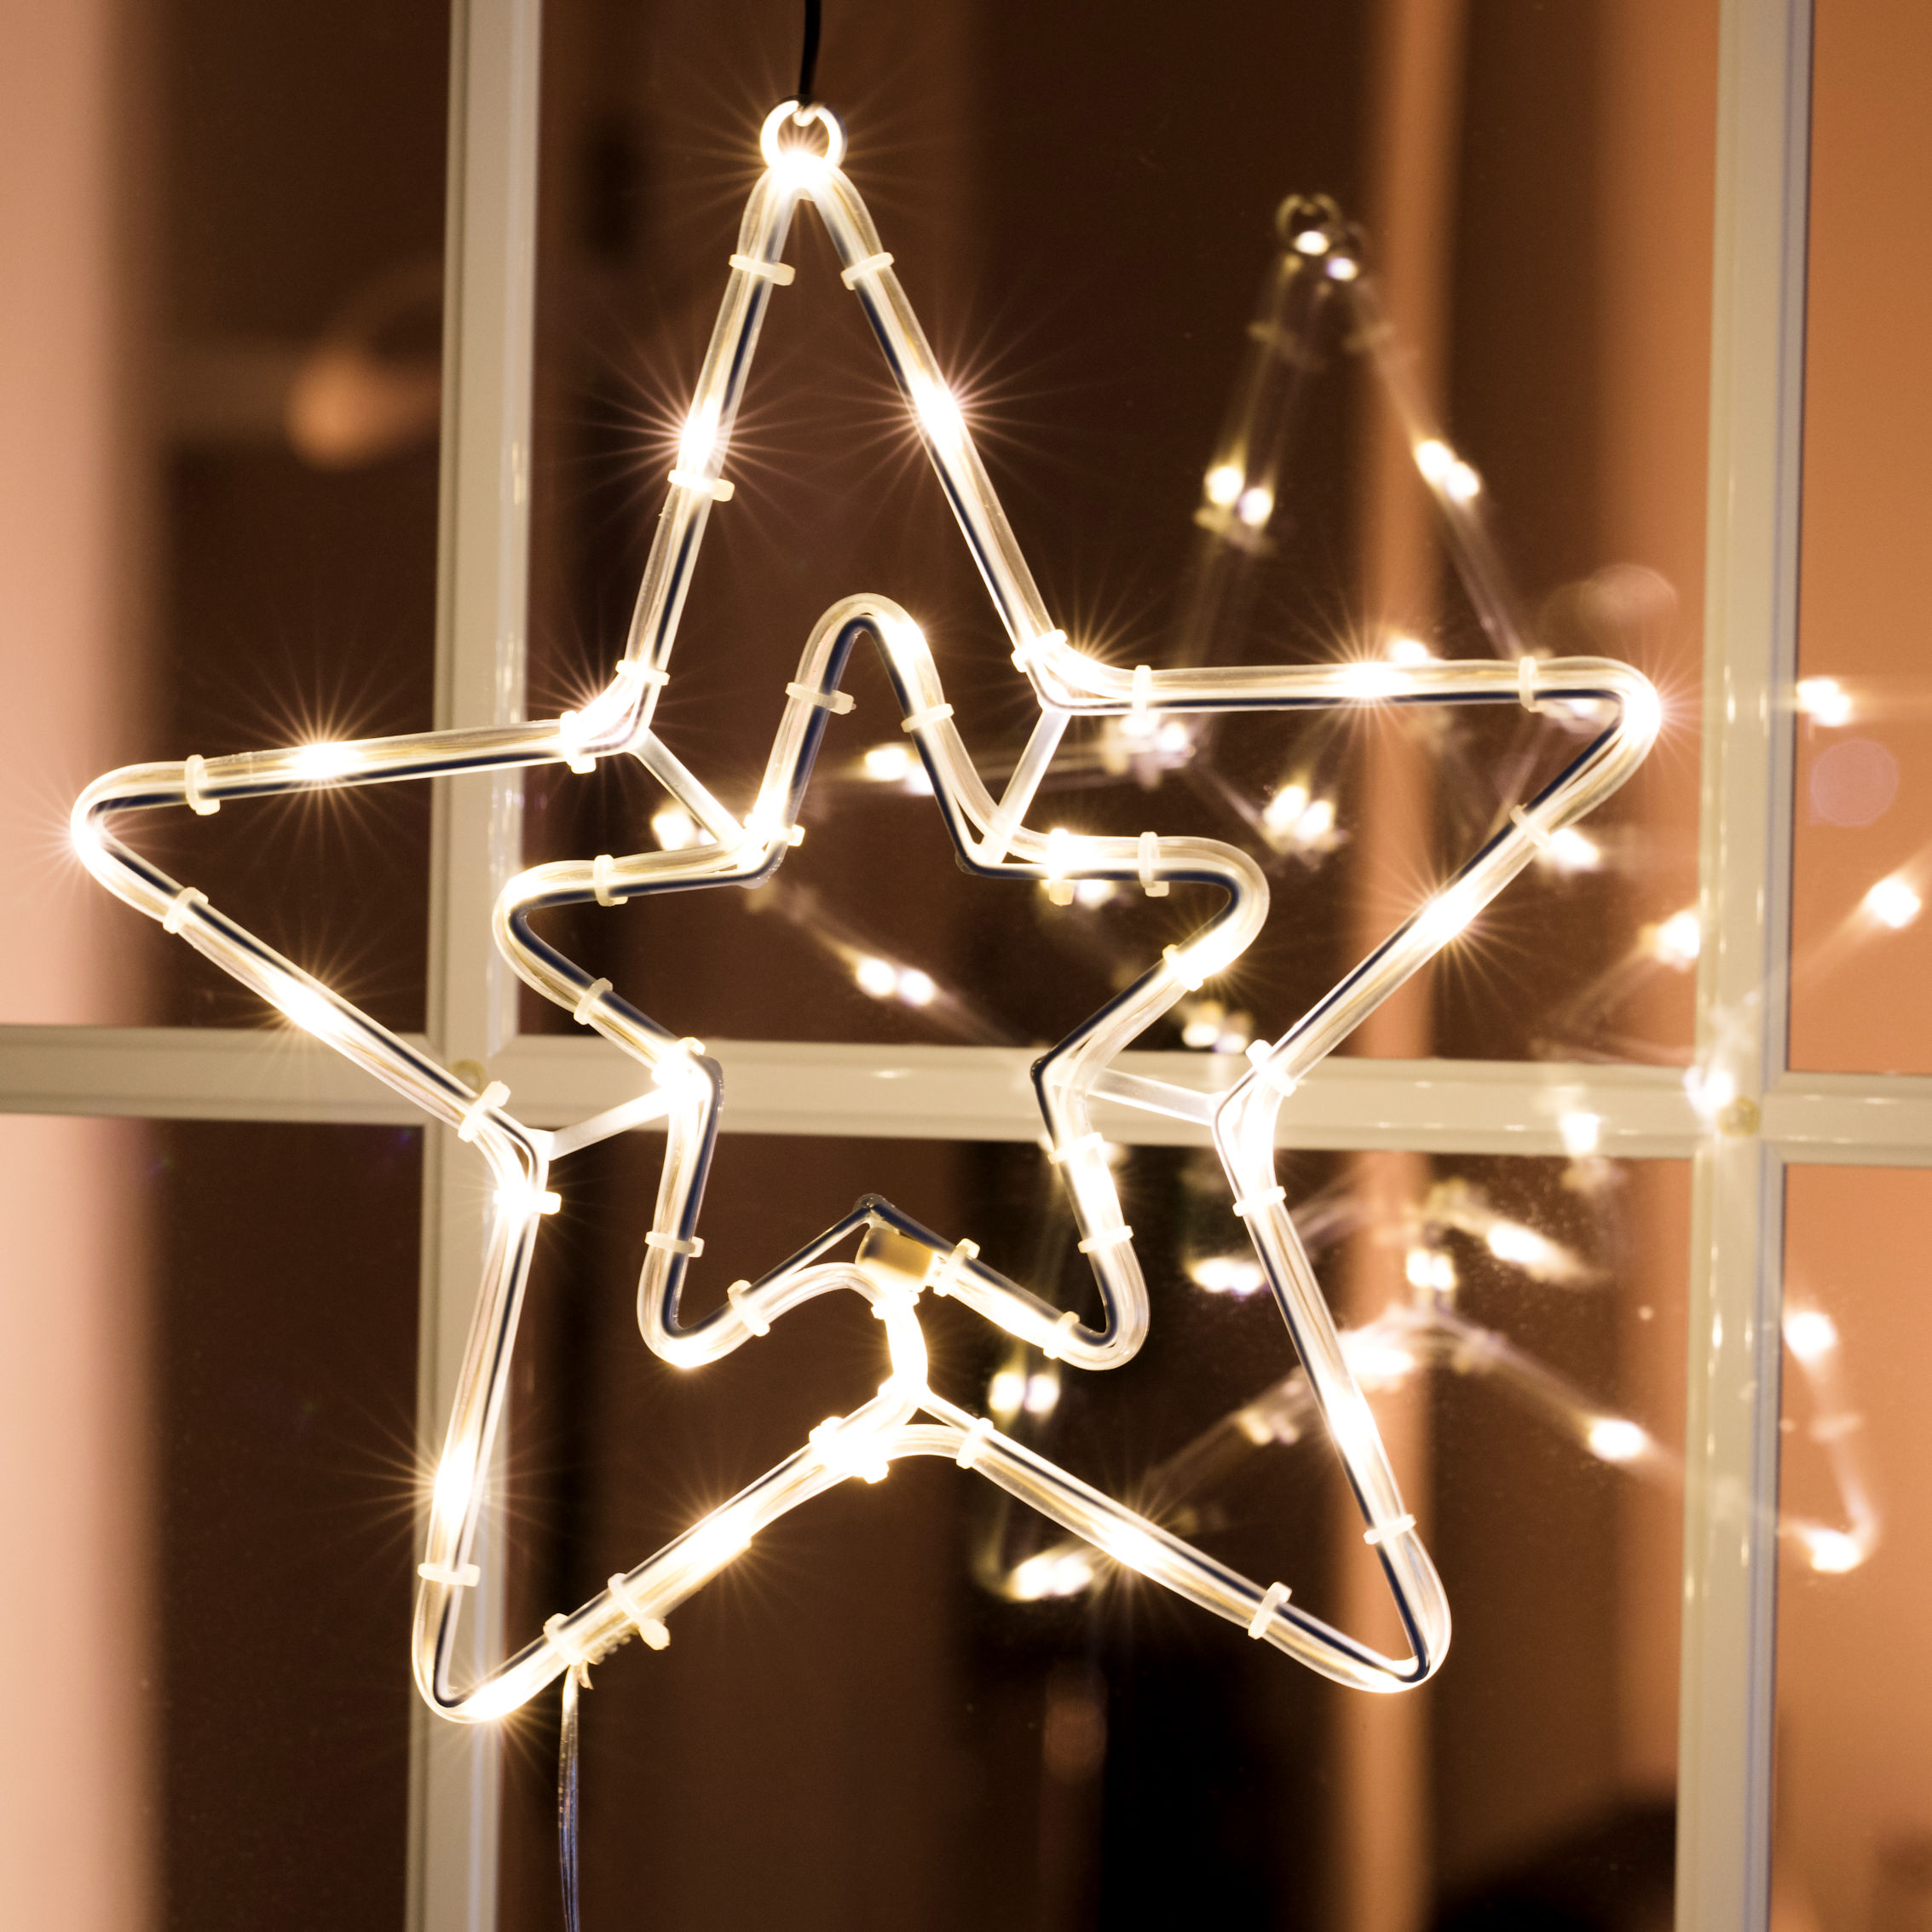 LED Fenster Silhouette Stern beleuchtet ca. 28 cm x 27 cm - Batterie betrieben